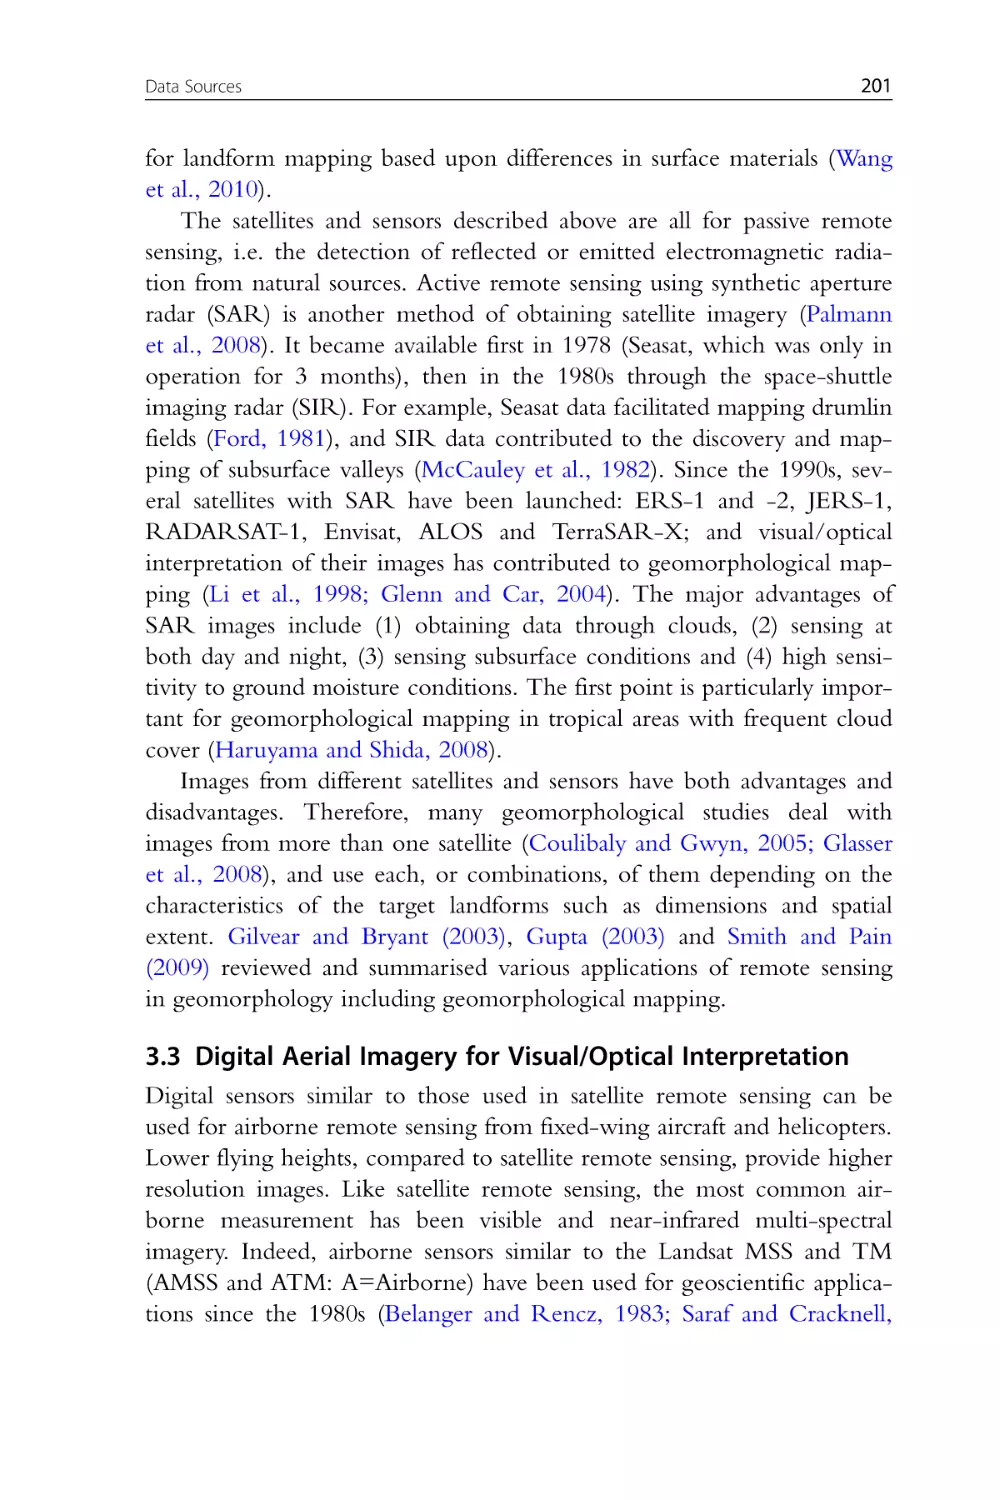 3.3 Digital Aerial Imagery for Visual/Optical Interpretation